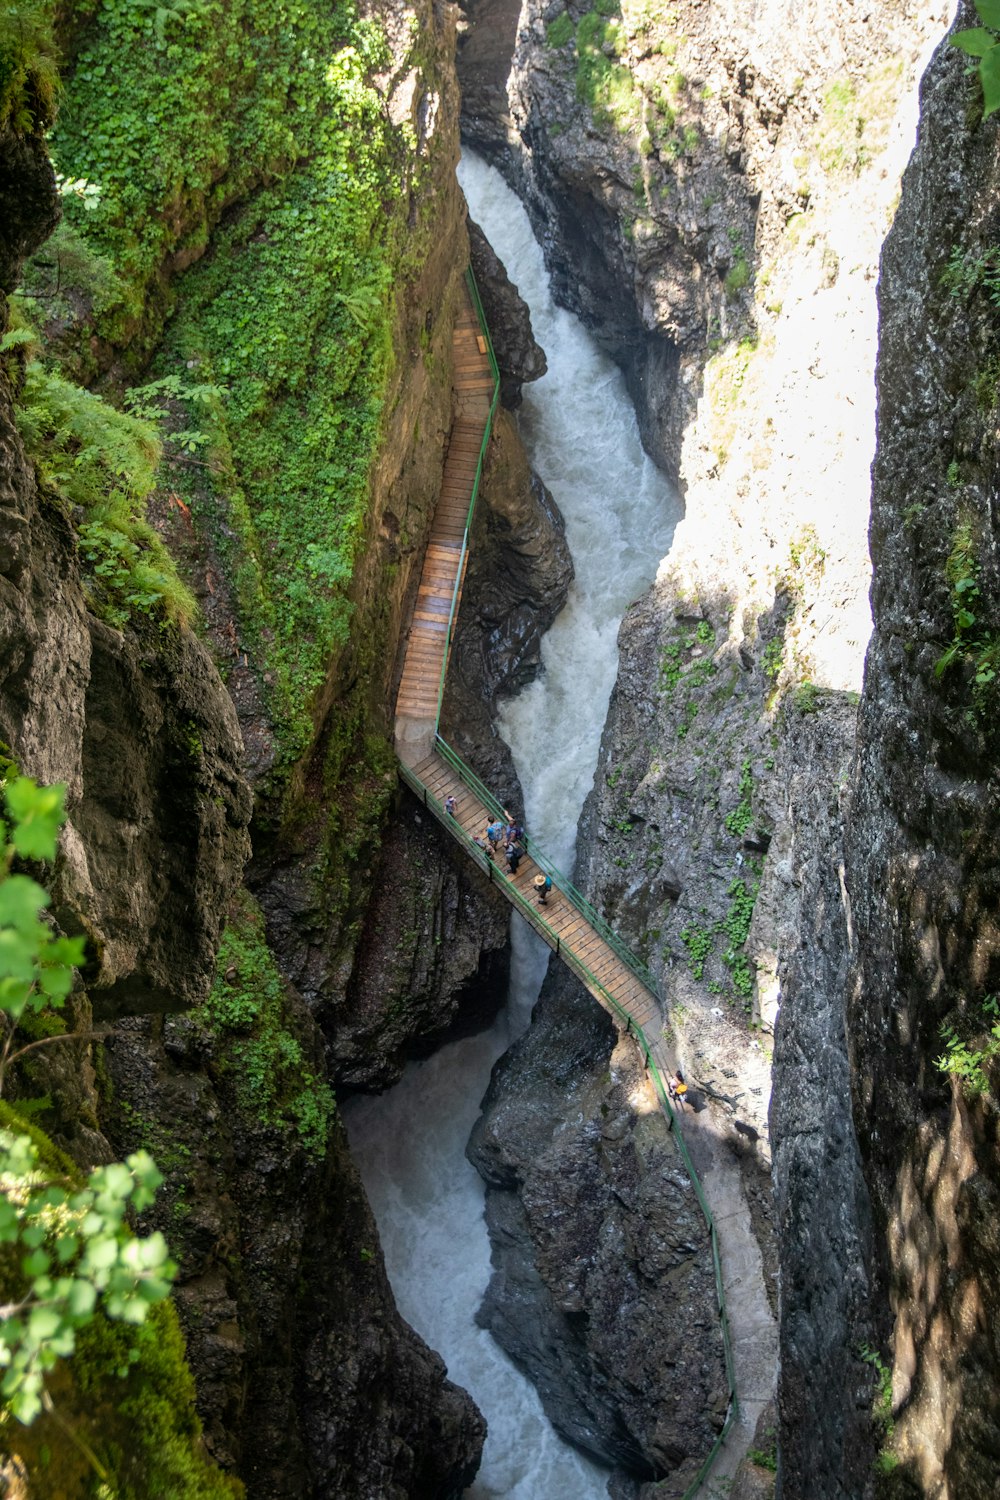 a long wooden bridge over a river in a canyon